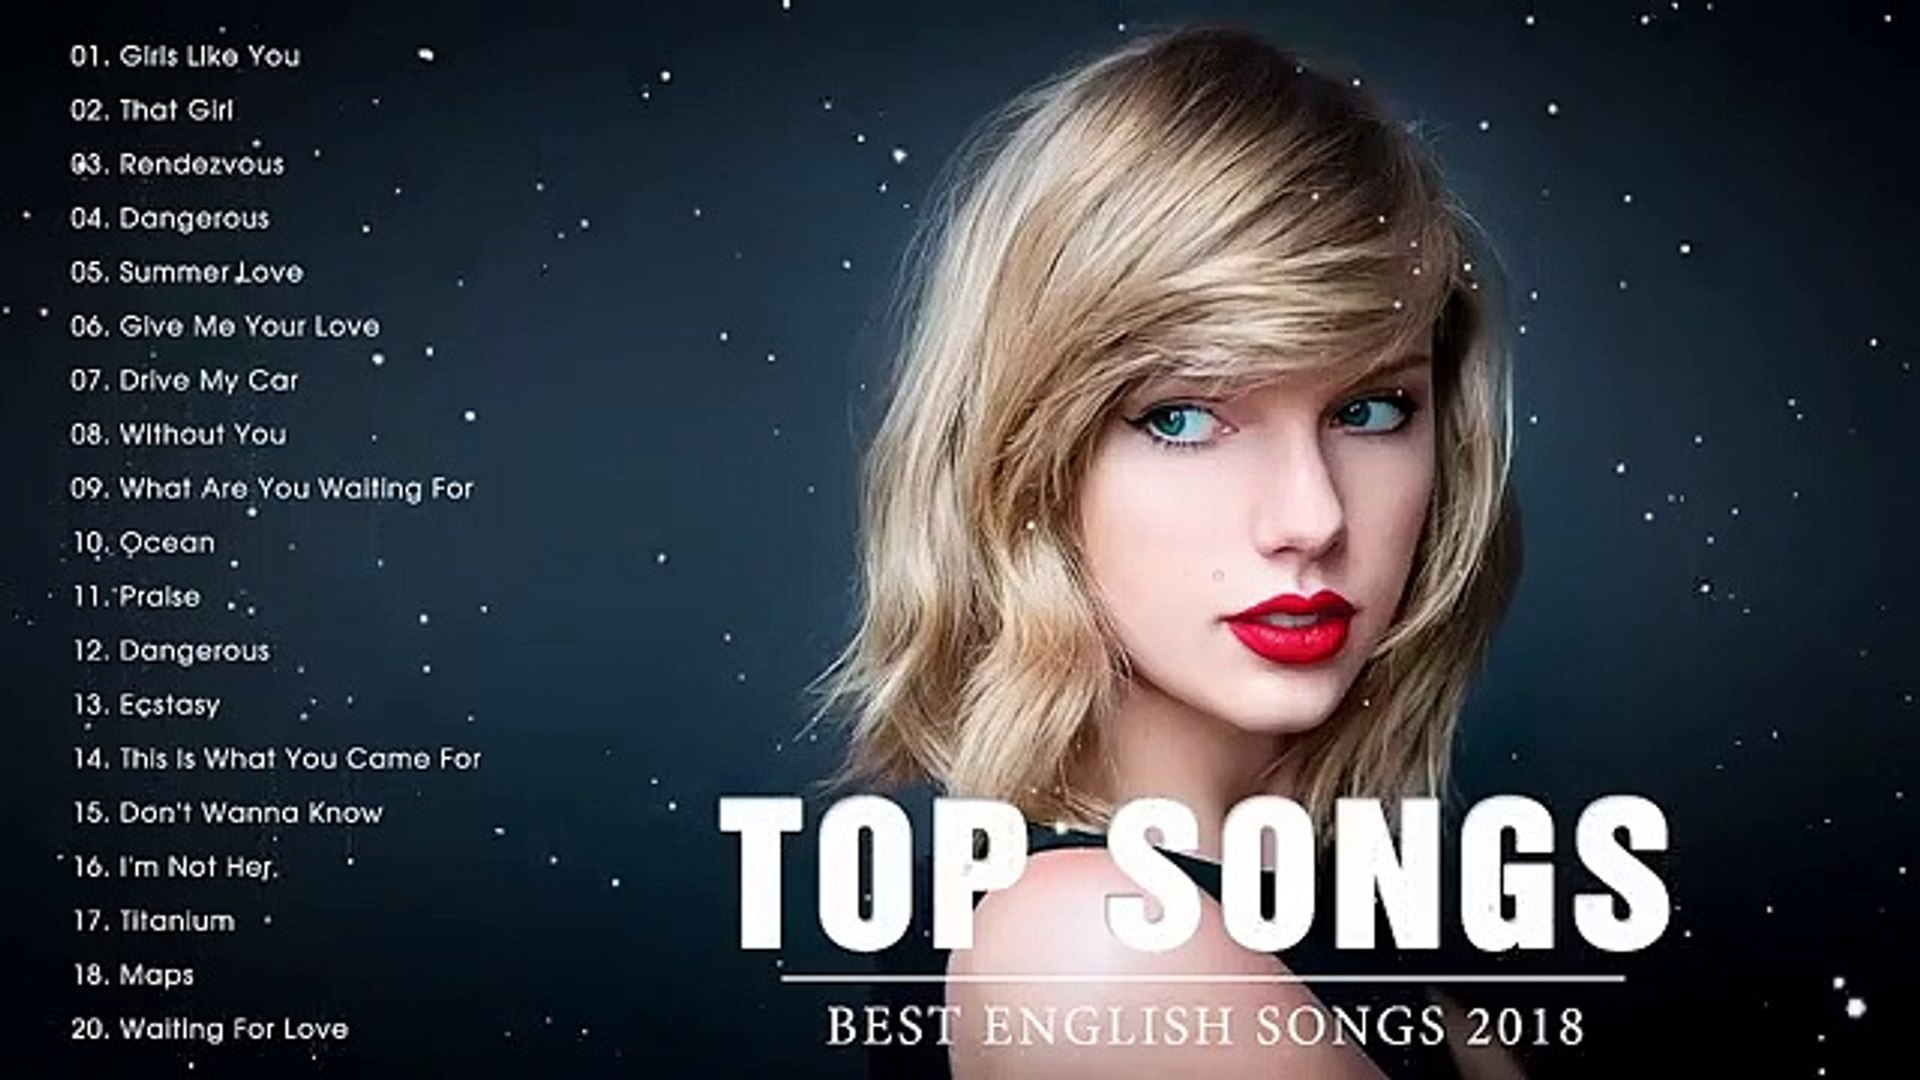 The best Songs of 2019. Top English Songs. Топ песни 2018. Английские песни 2018. Зарубежные песни 2019